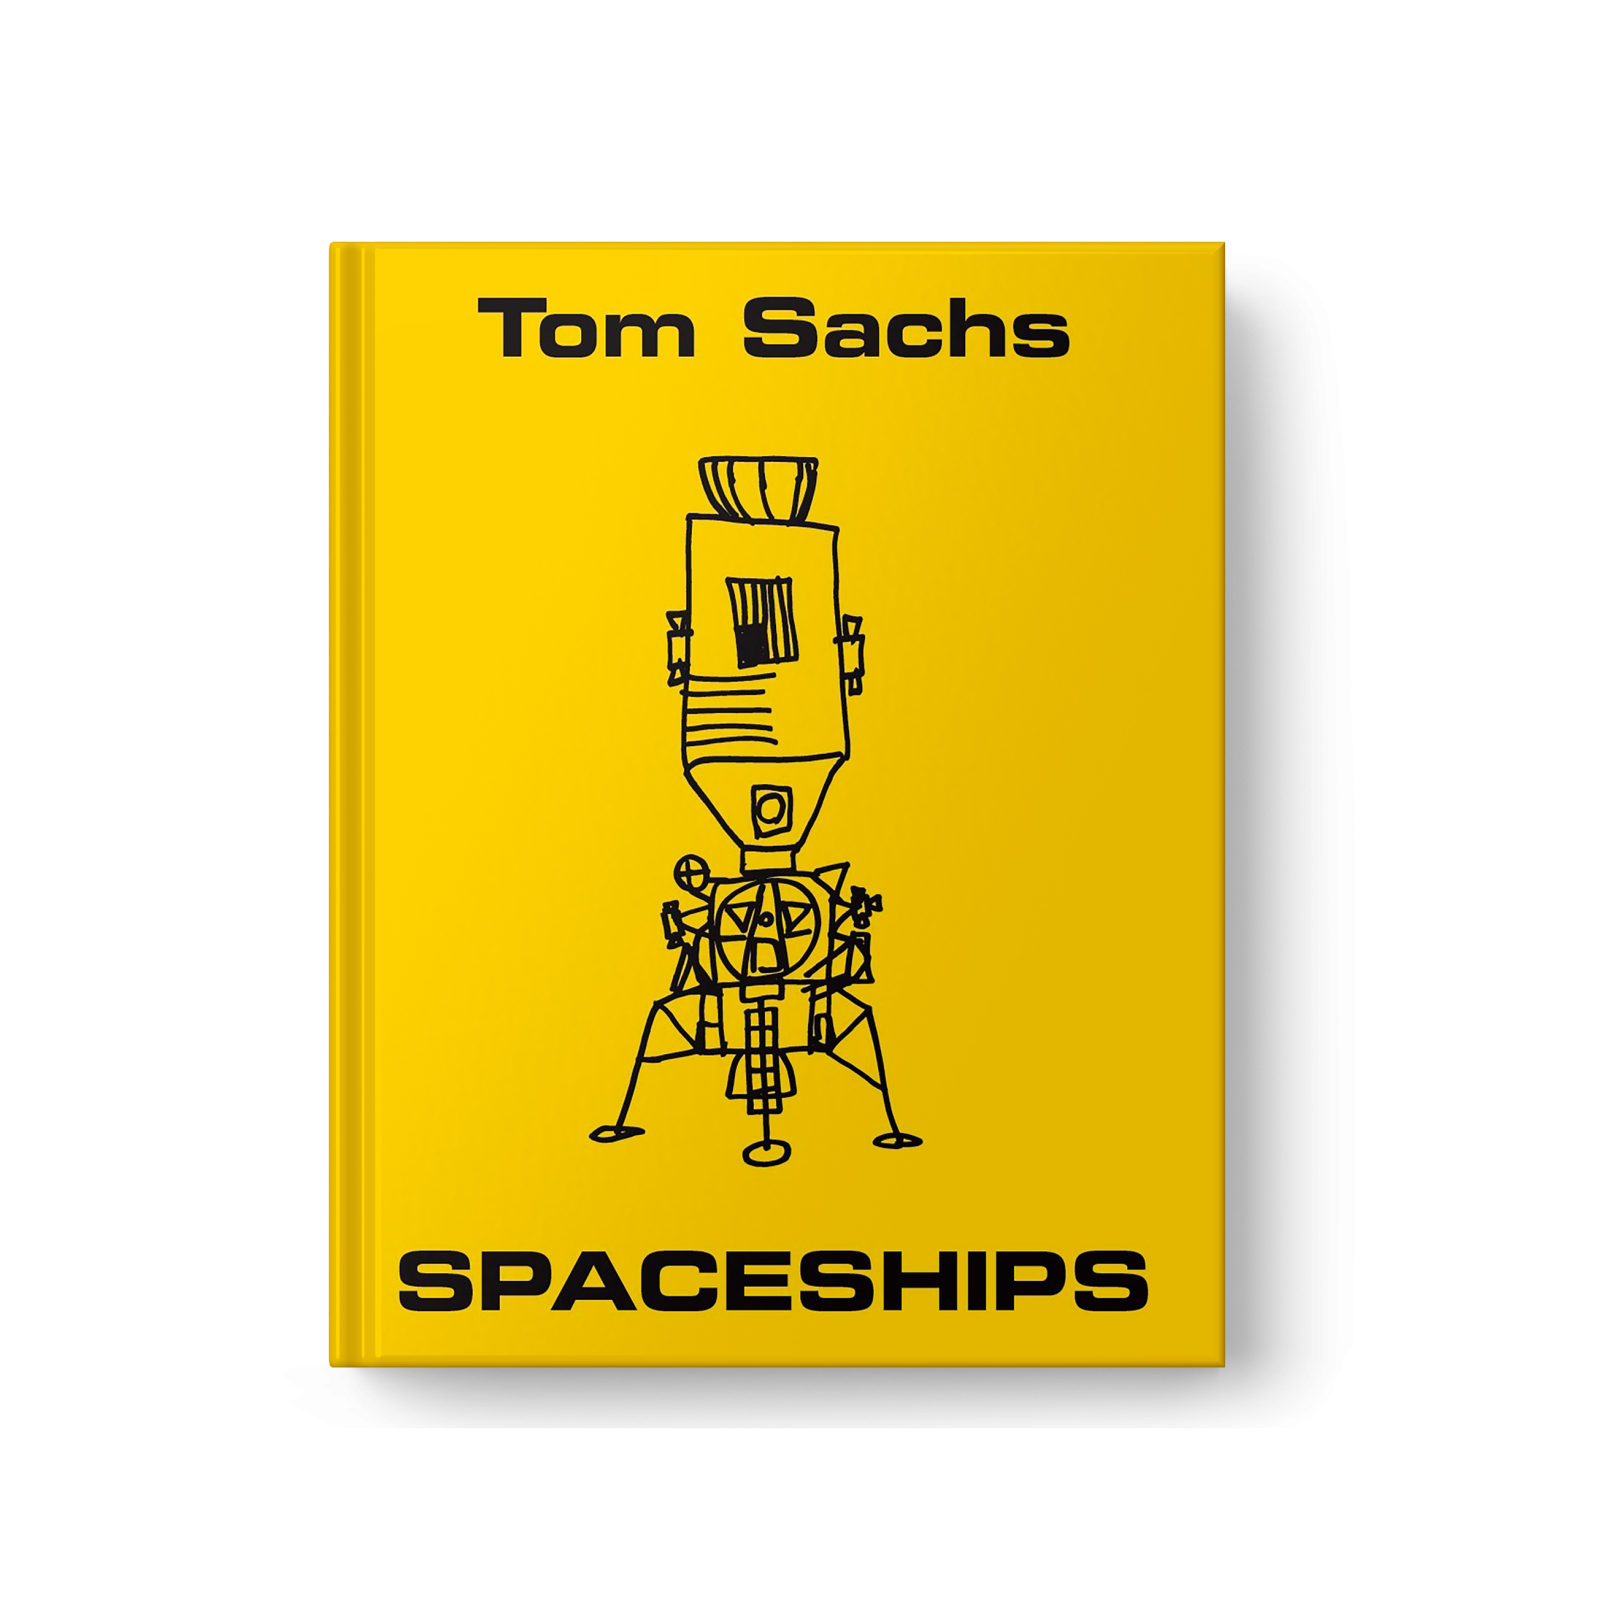 Tom Sachs Spaceships